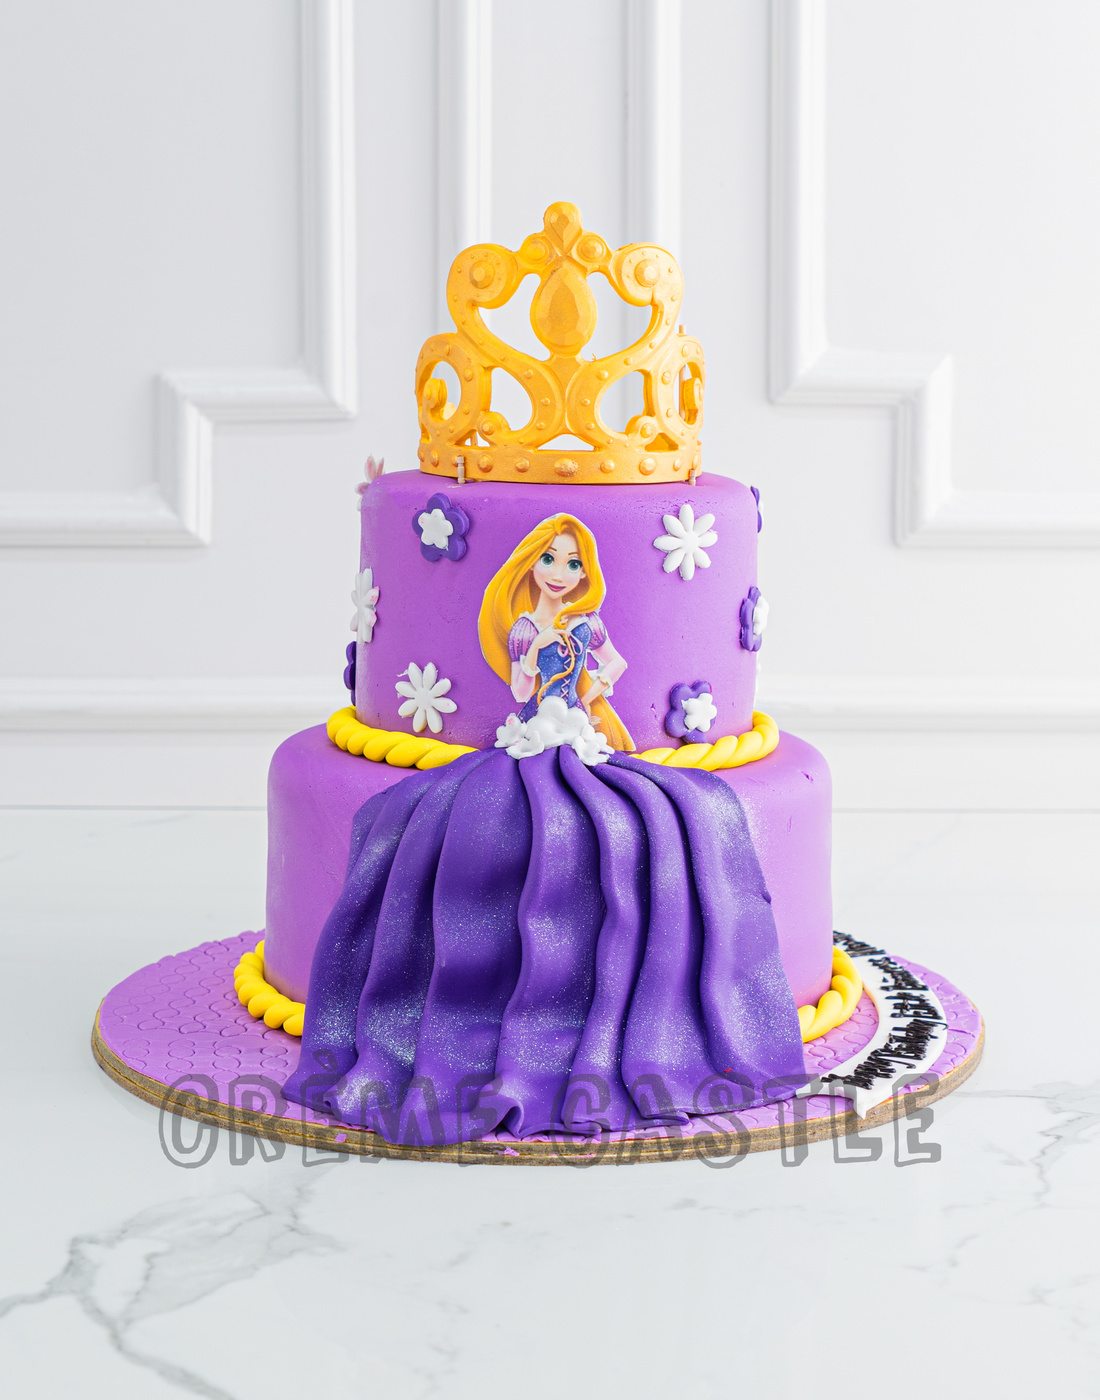 Tangled Rapunzel Cake How to Make a Disney Princess Rapunzel Doll Cake -  YouTube